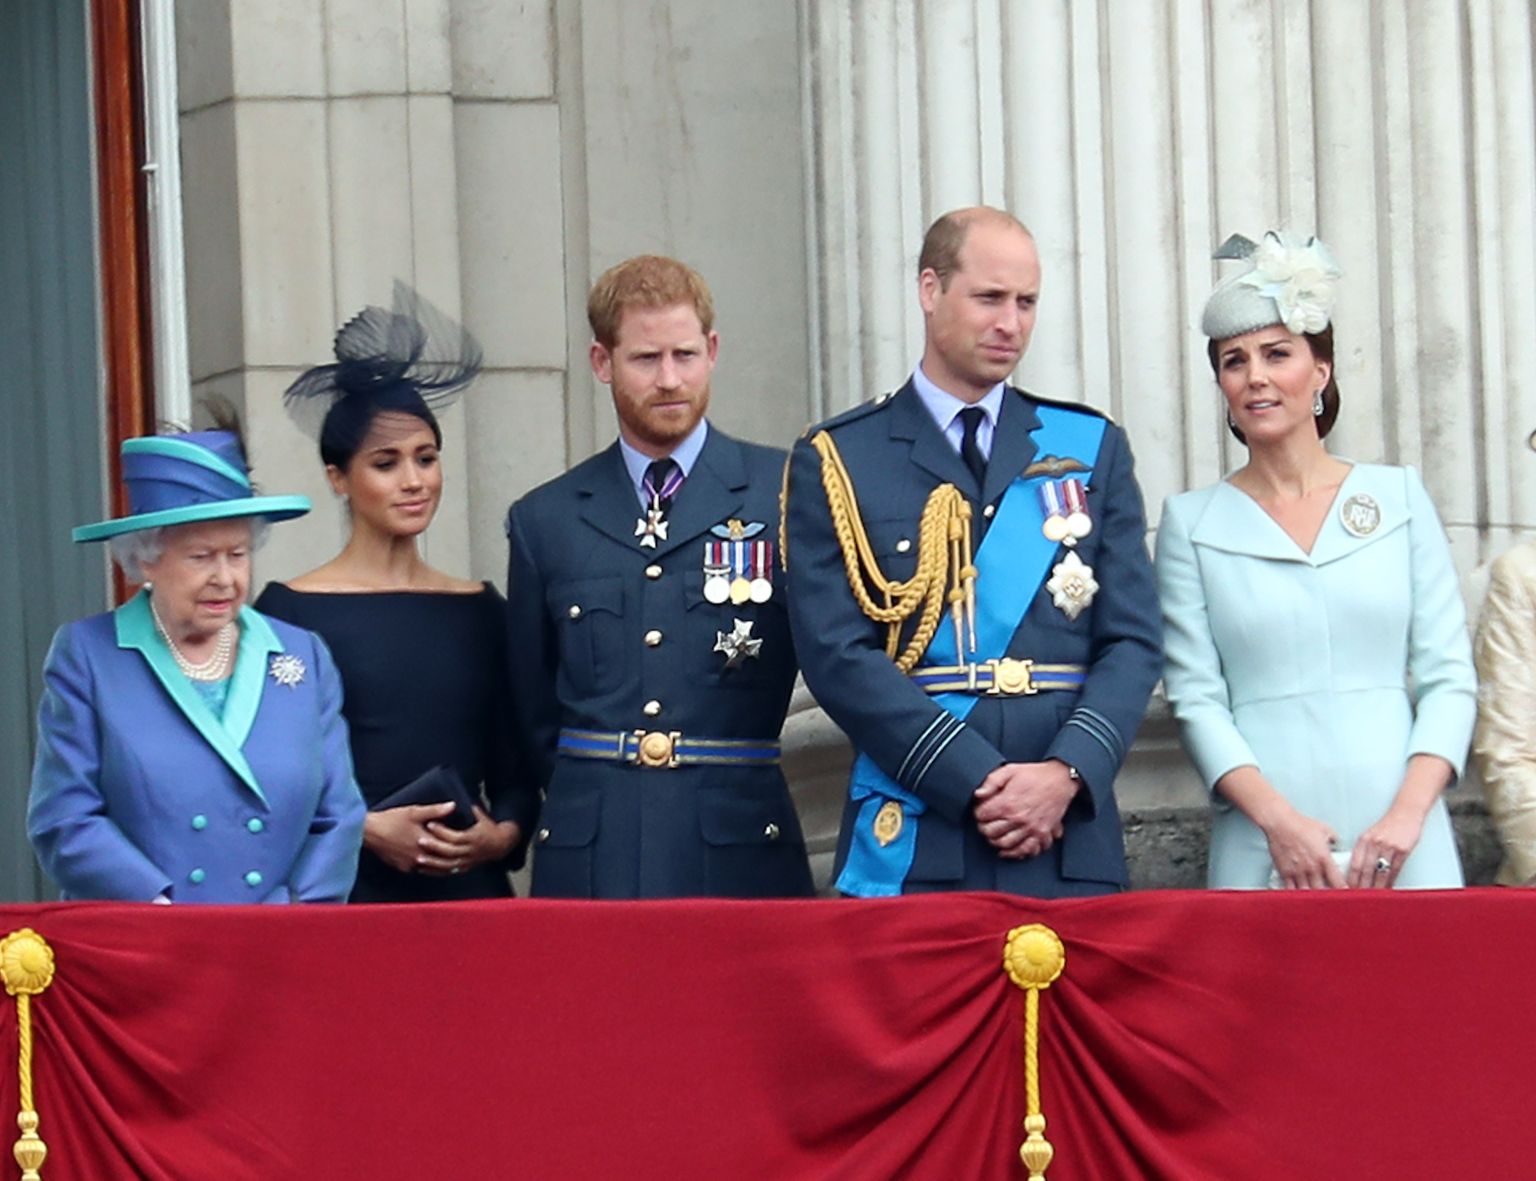 Vasakult alates: Elizabeth II, hertsoginna Meghan, prints harry, prints William ja hertsoginna Catherine